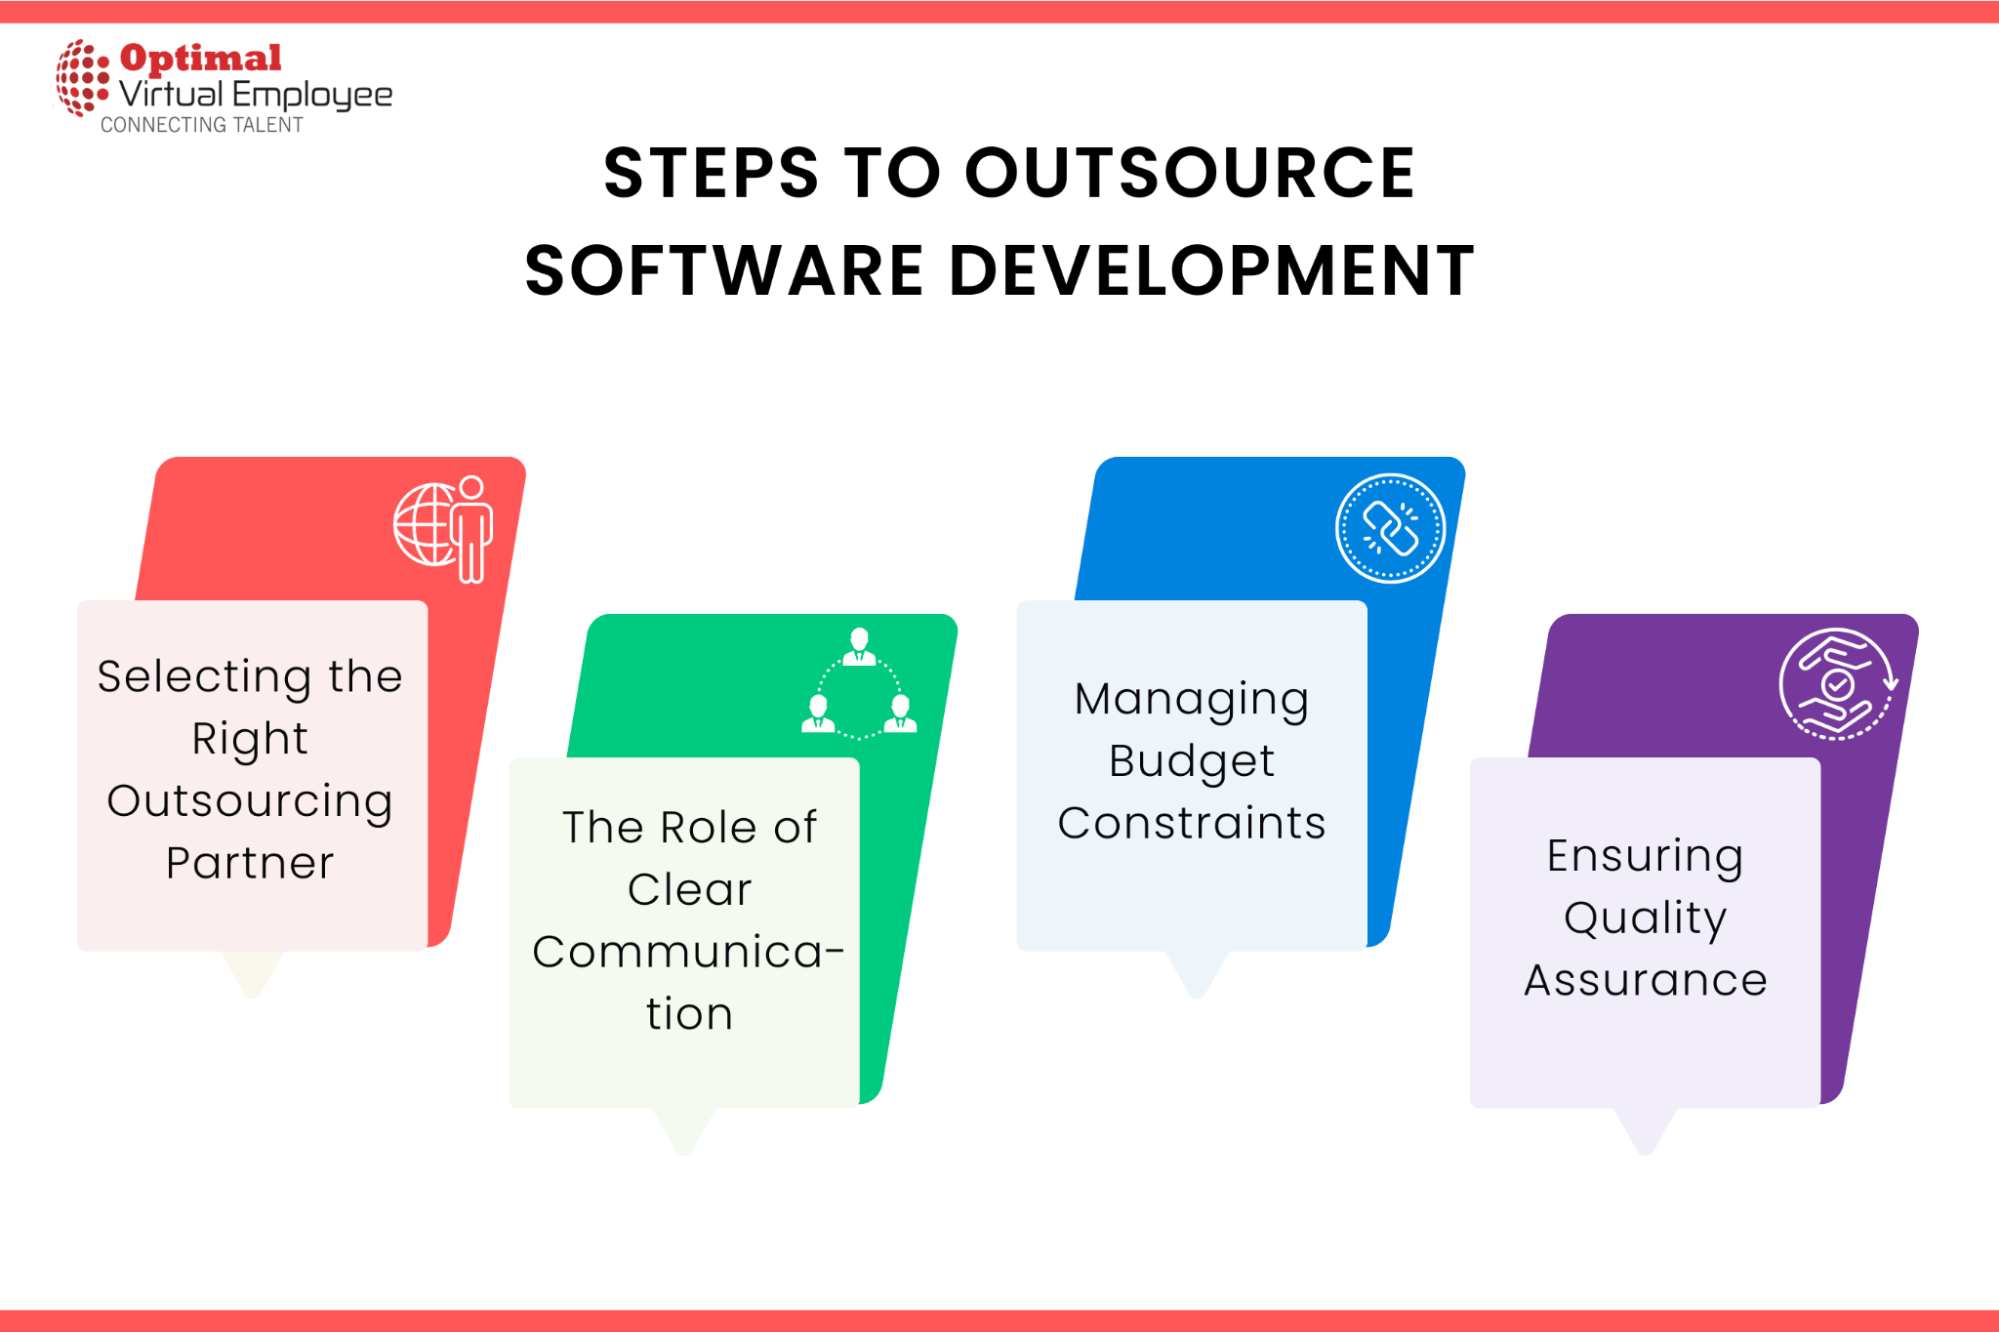 Key Steps to Outsourcing Software Development & Avoiding Risks